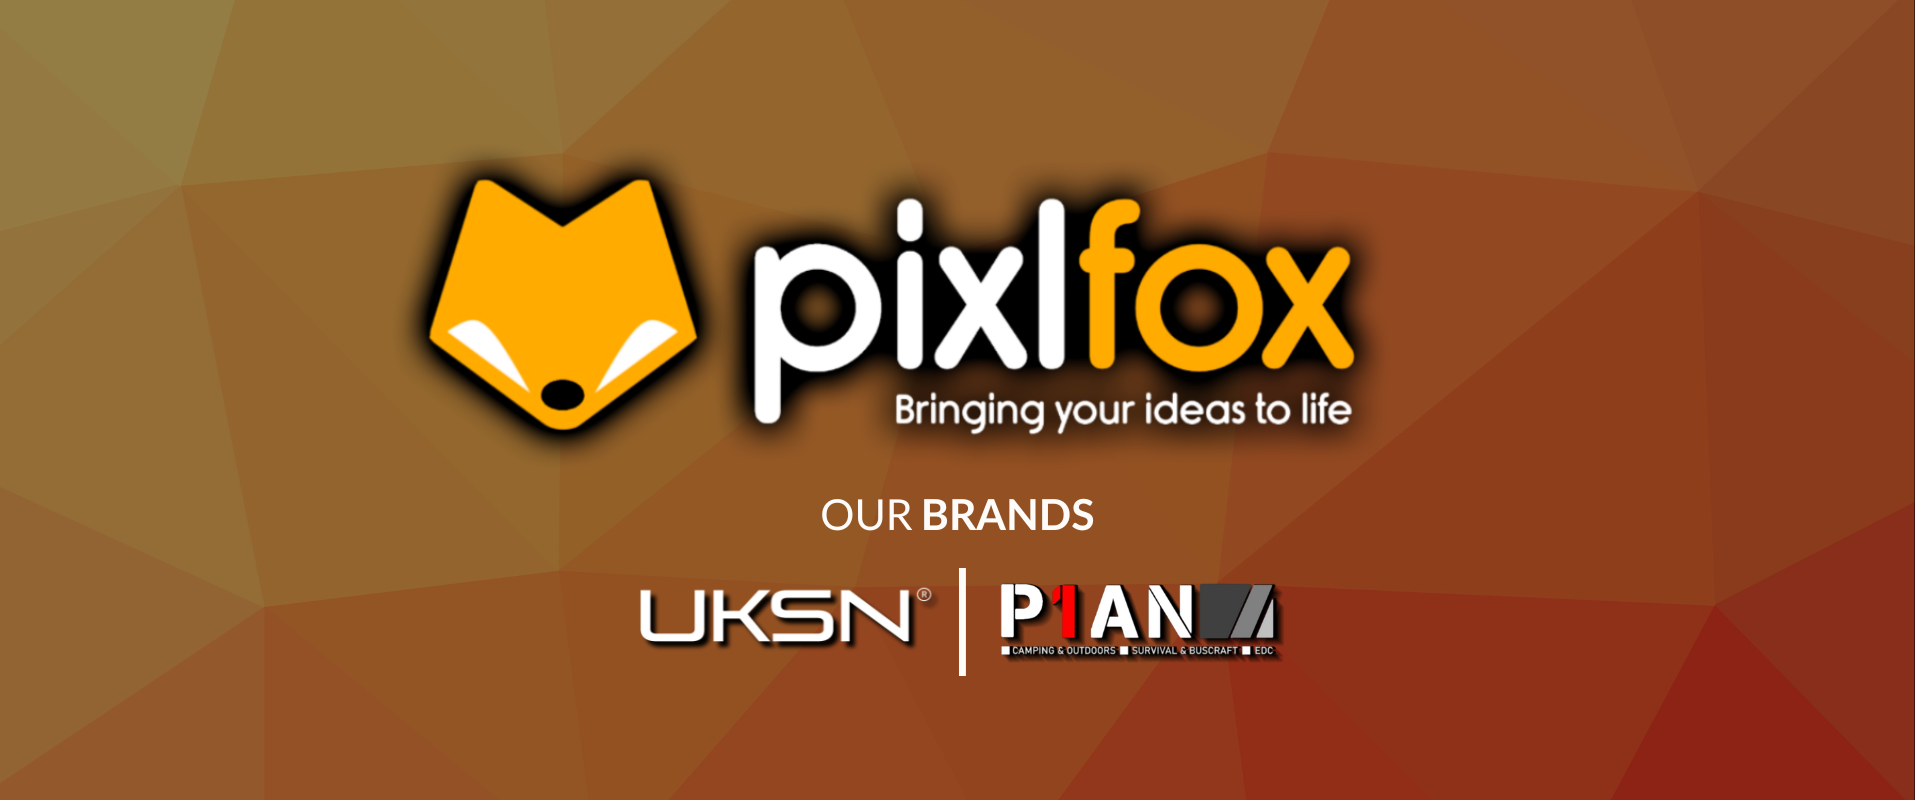 Welcome to Pixlfox